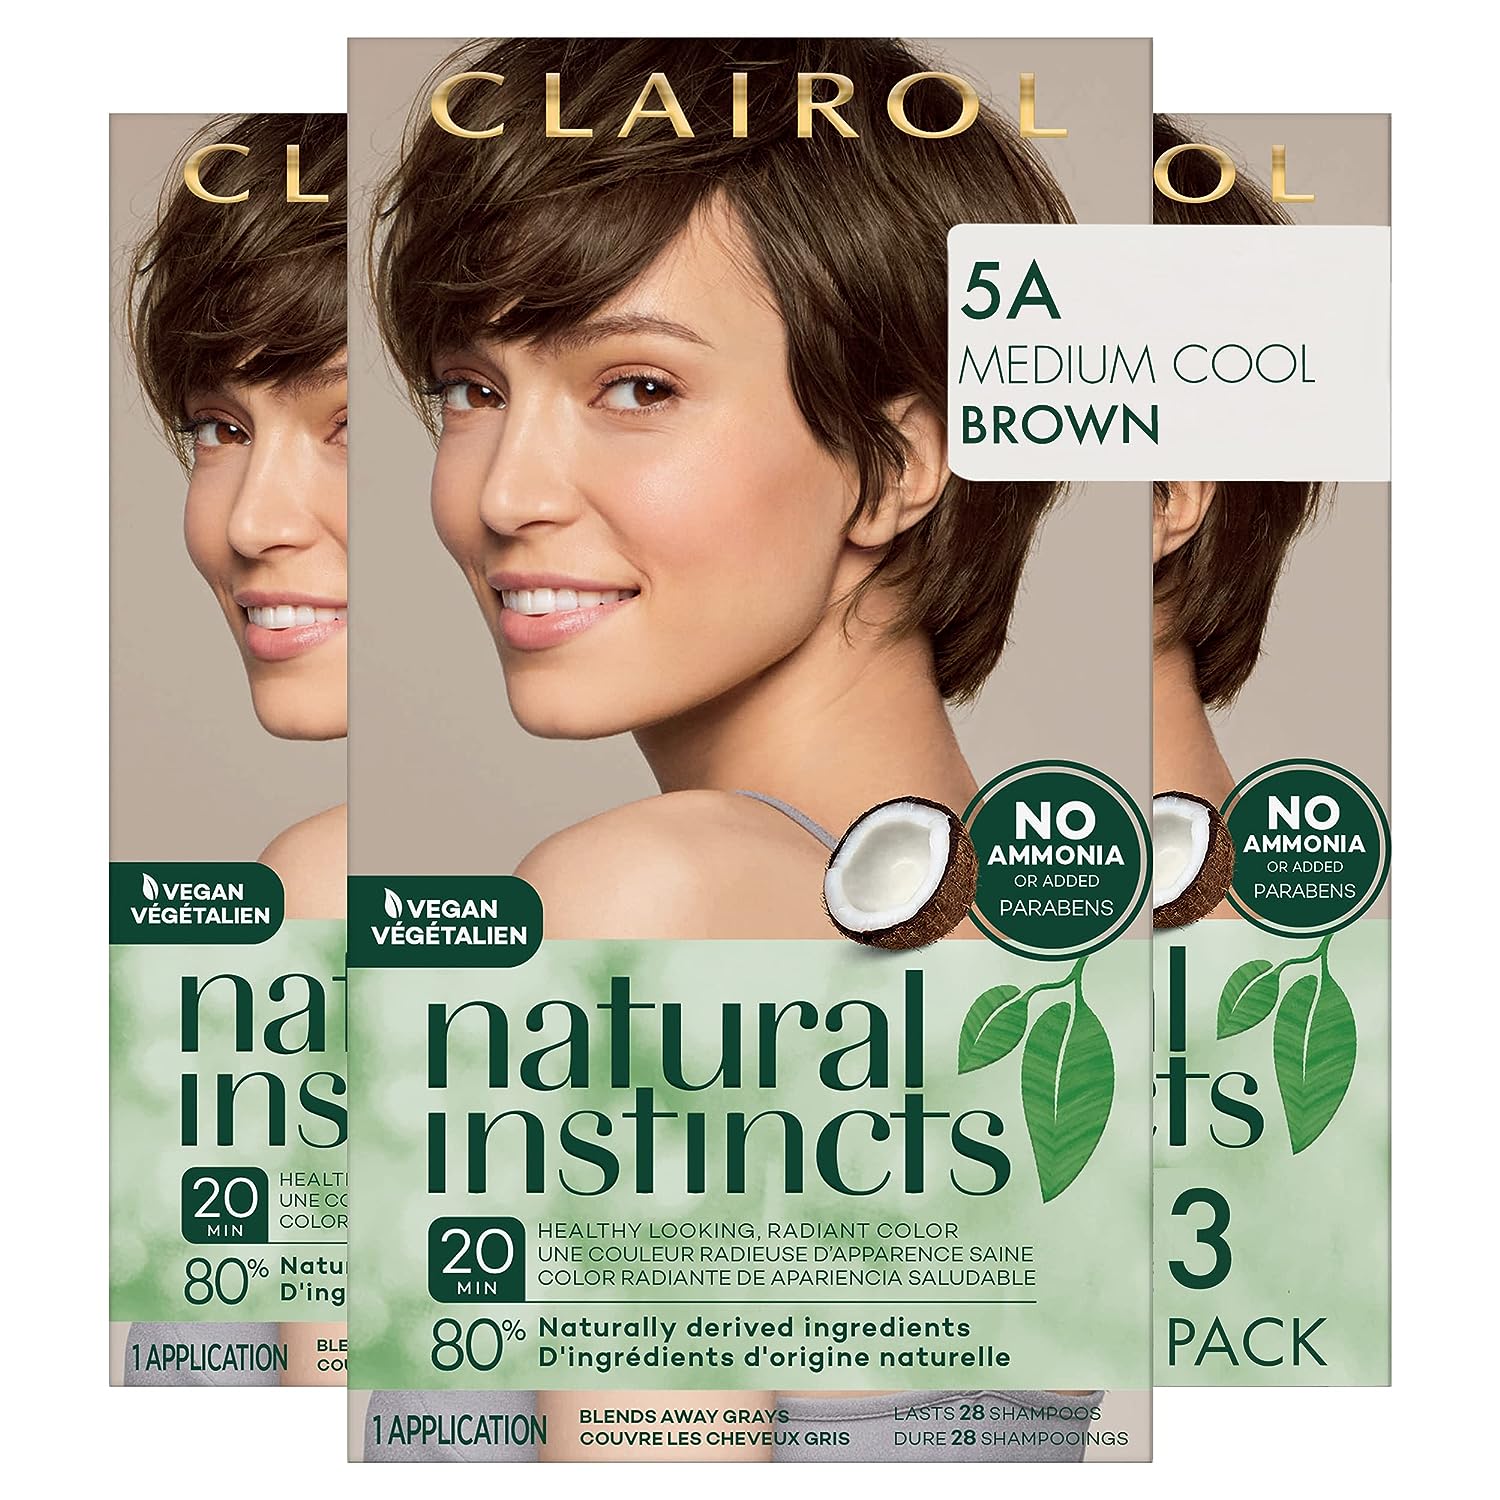 Clairol Natural Instincts Semi-Permanent Hair Dye

